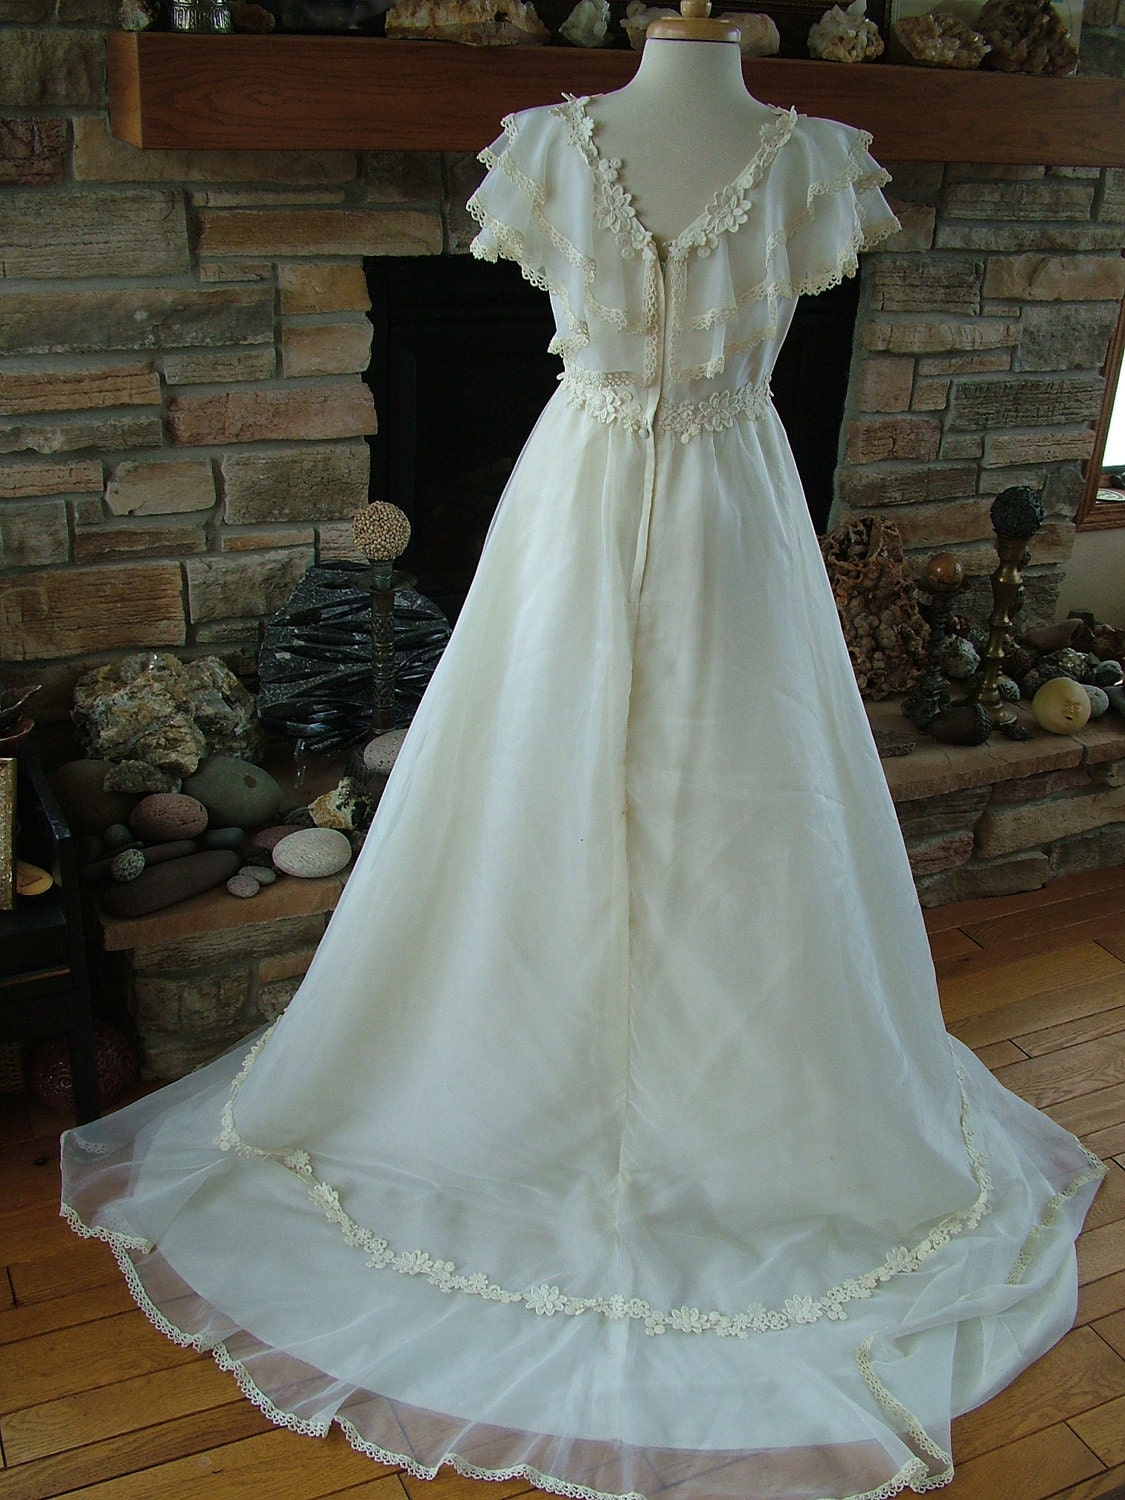 Wedding dress 1970s vintage bridal gown by RetroVintageWeddings